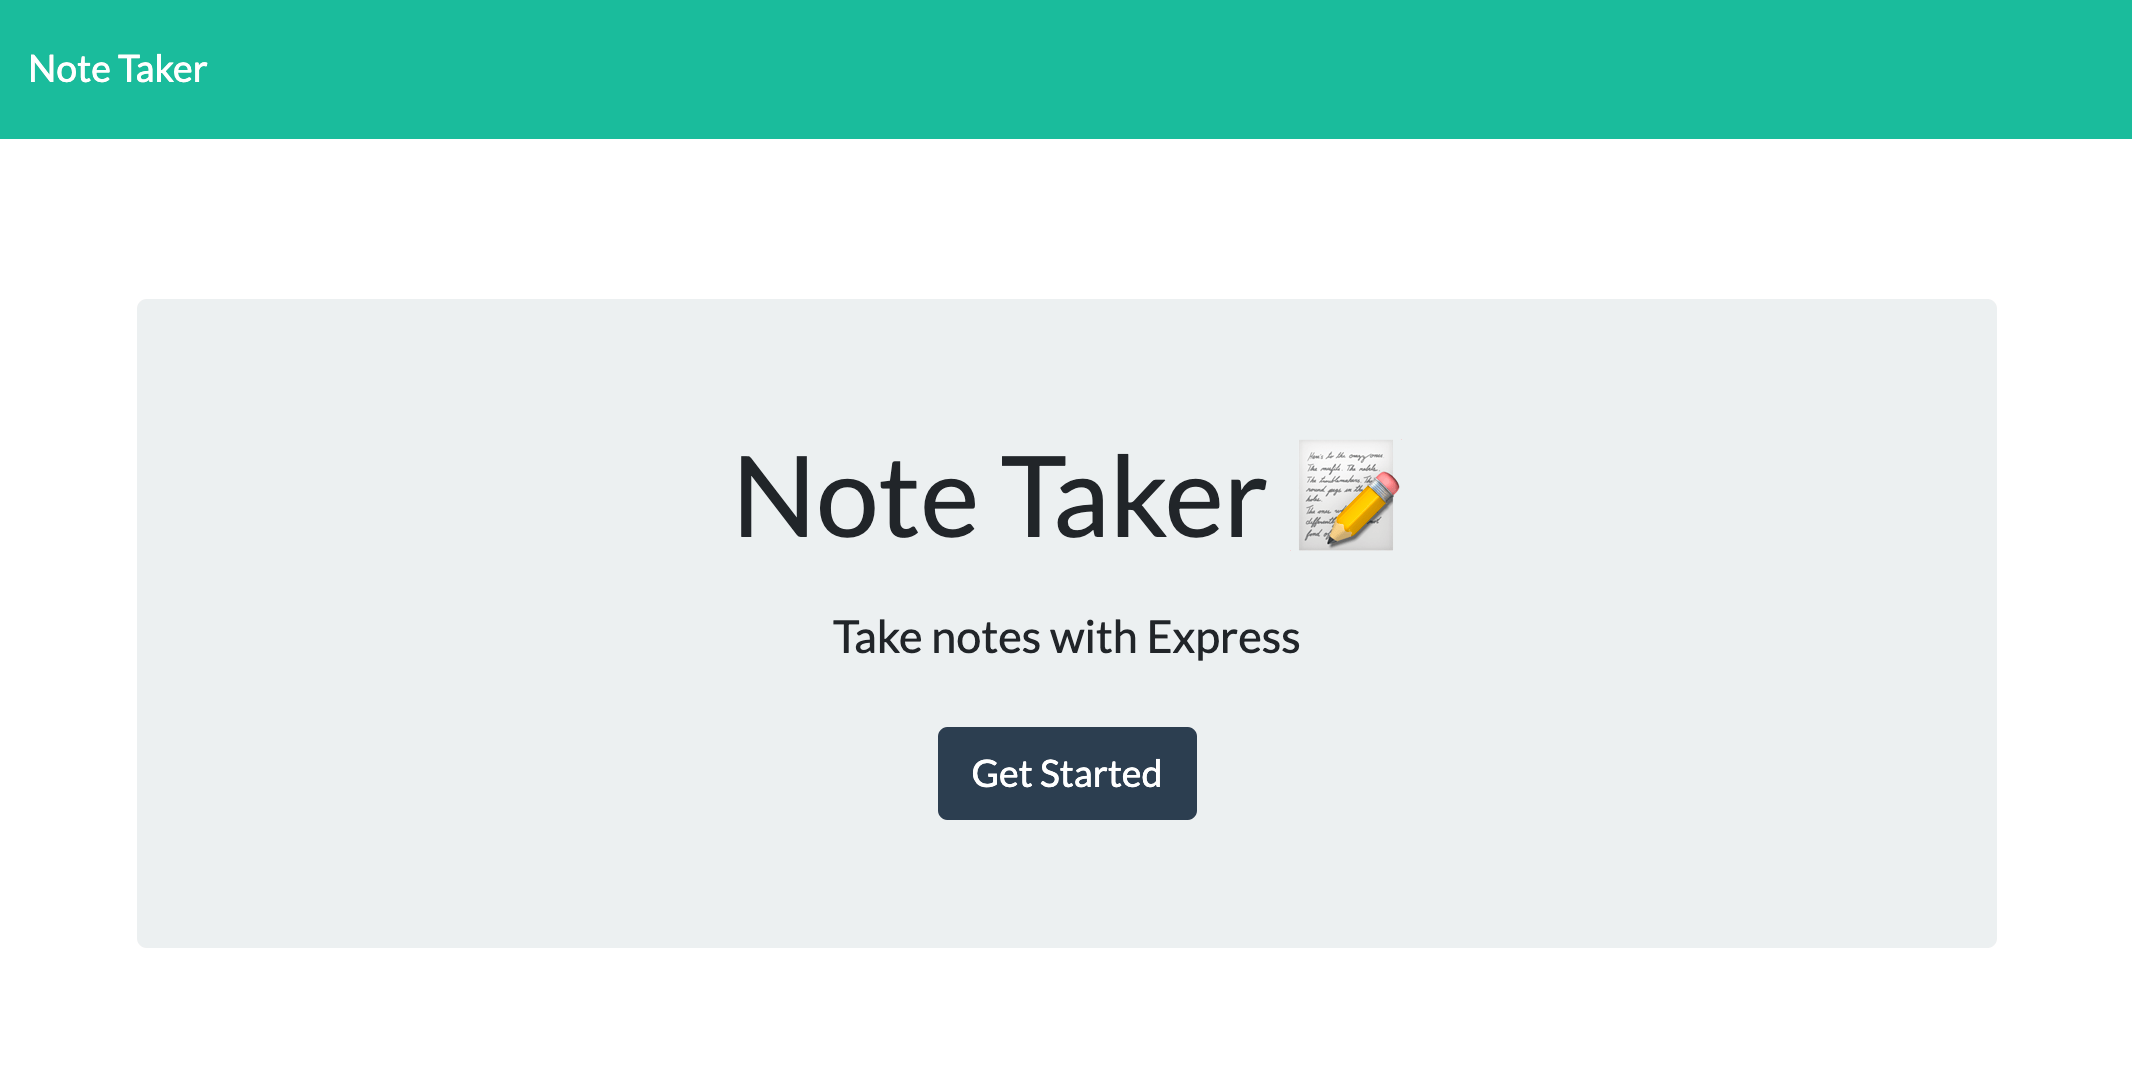 Using noteTaker